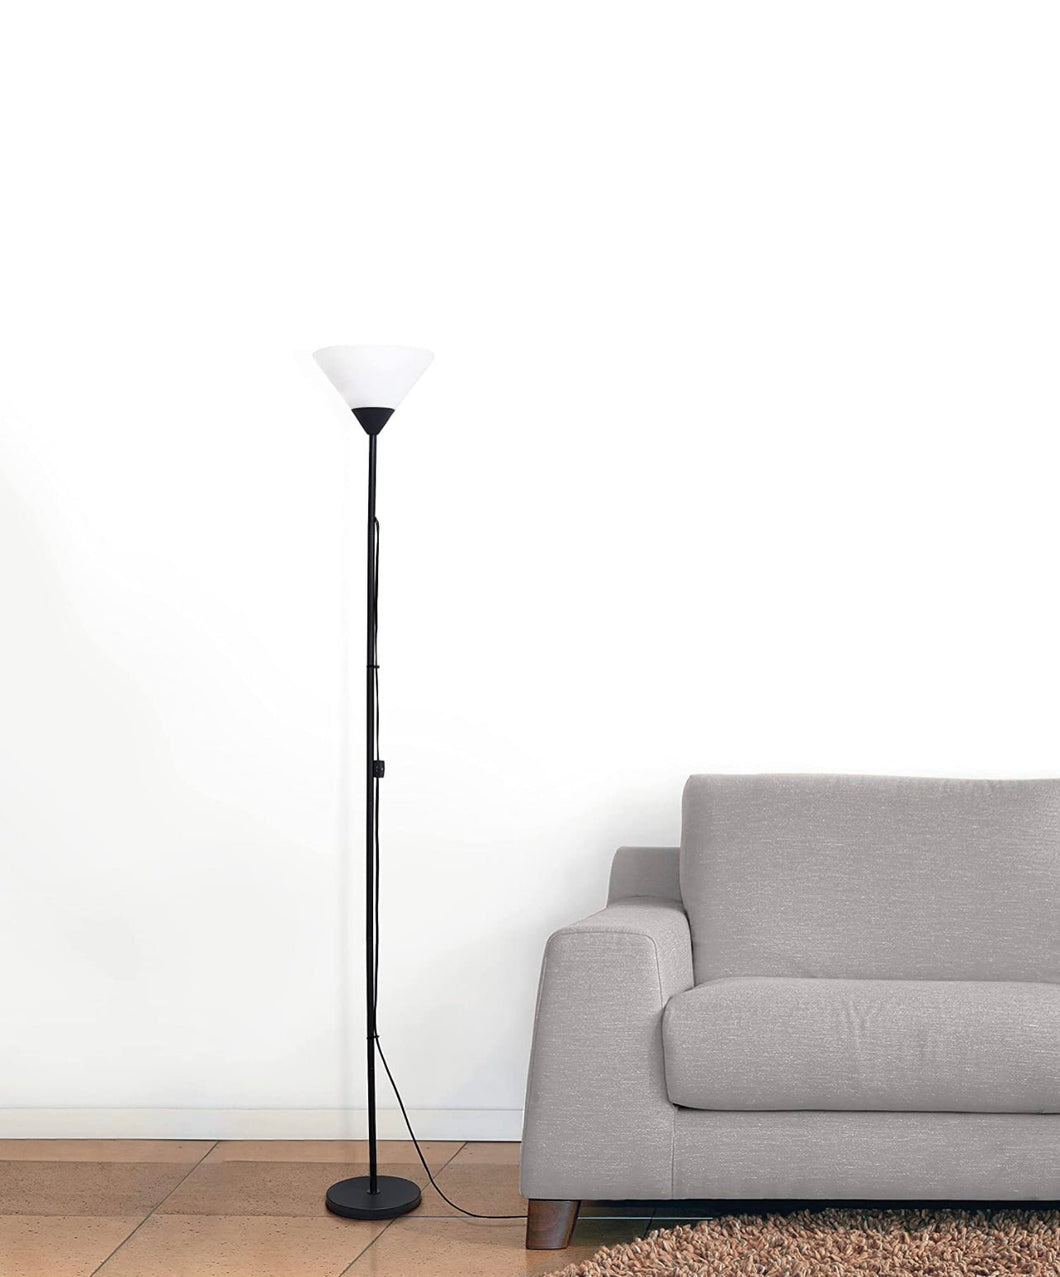 Simple Designs 1 Light Stick Torchiere Floor Lamp, Black - New Orleans Habitat for Humanity ReStore Elysian Fields